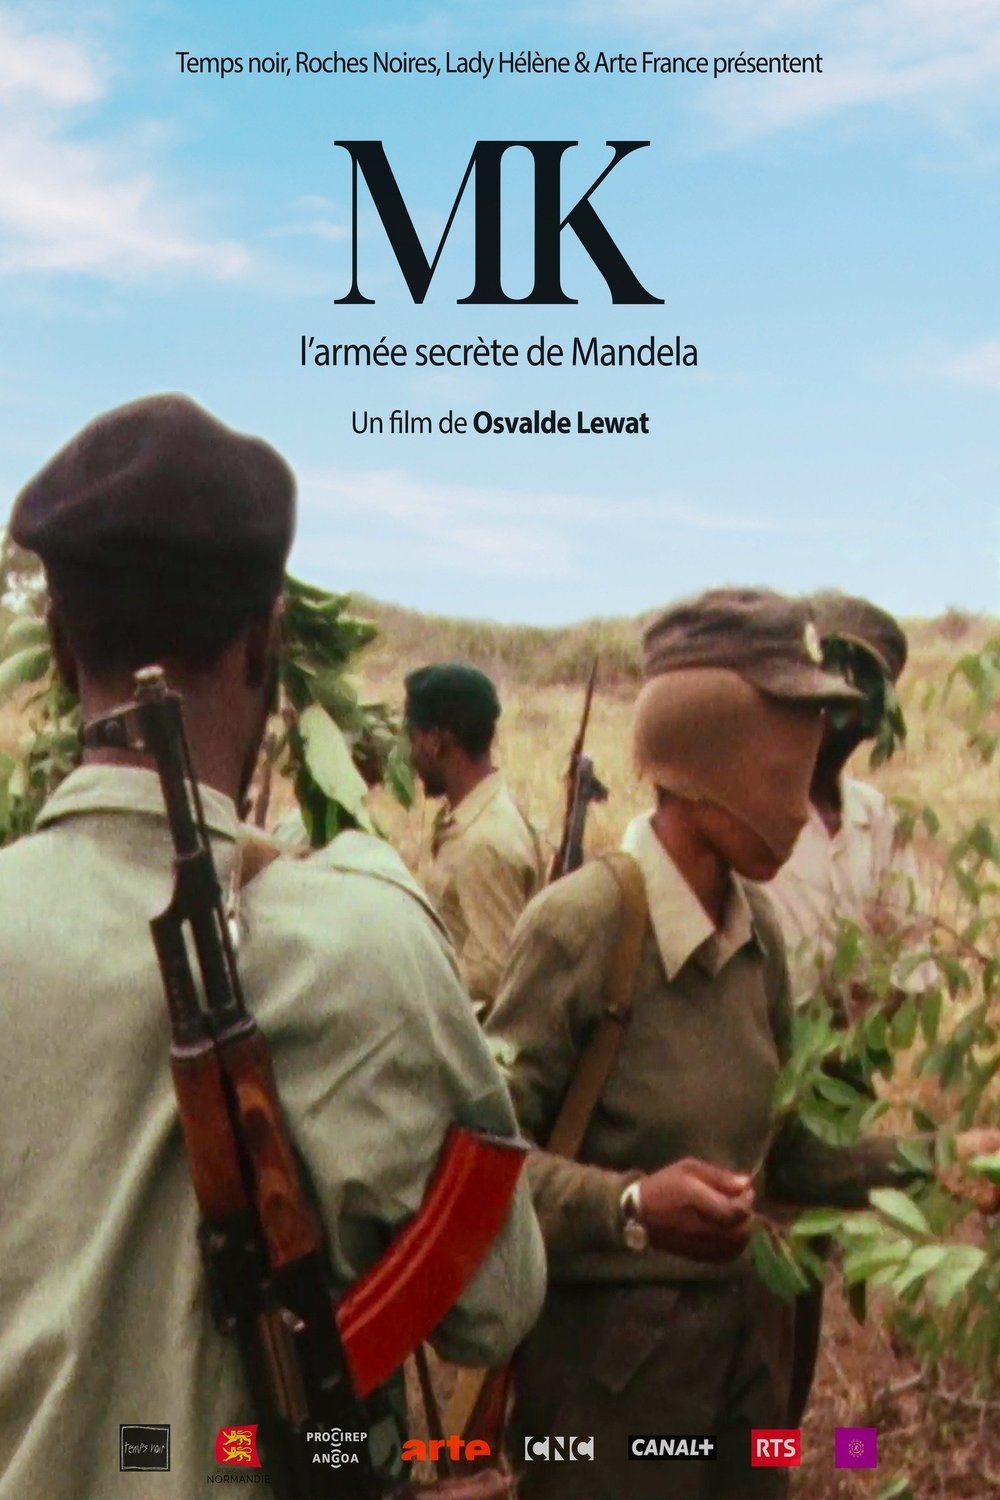 Poster of the movie MK: Mandela's Secret Army